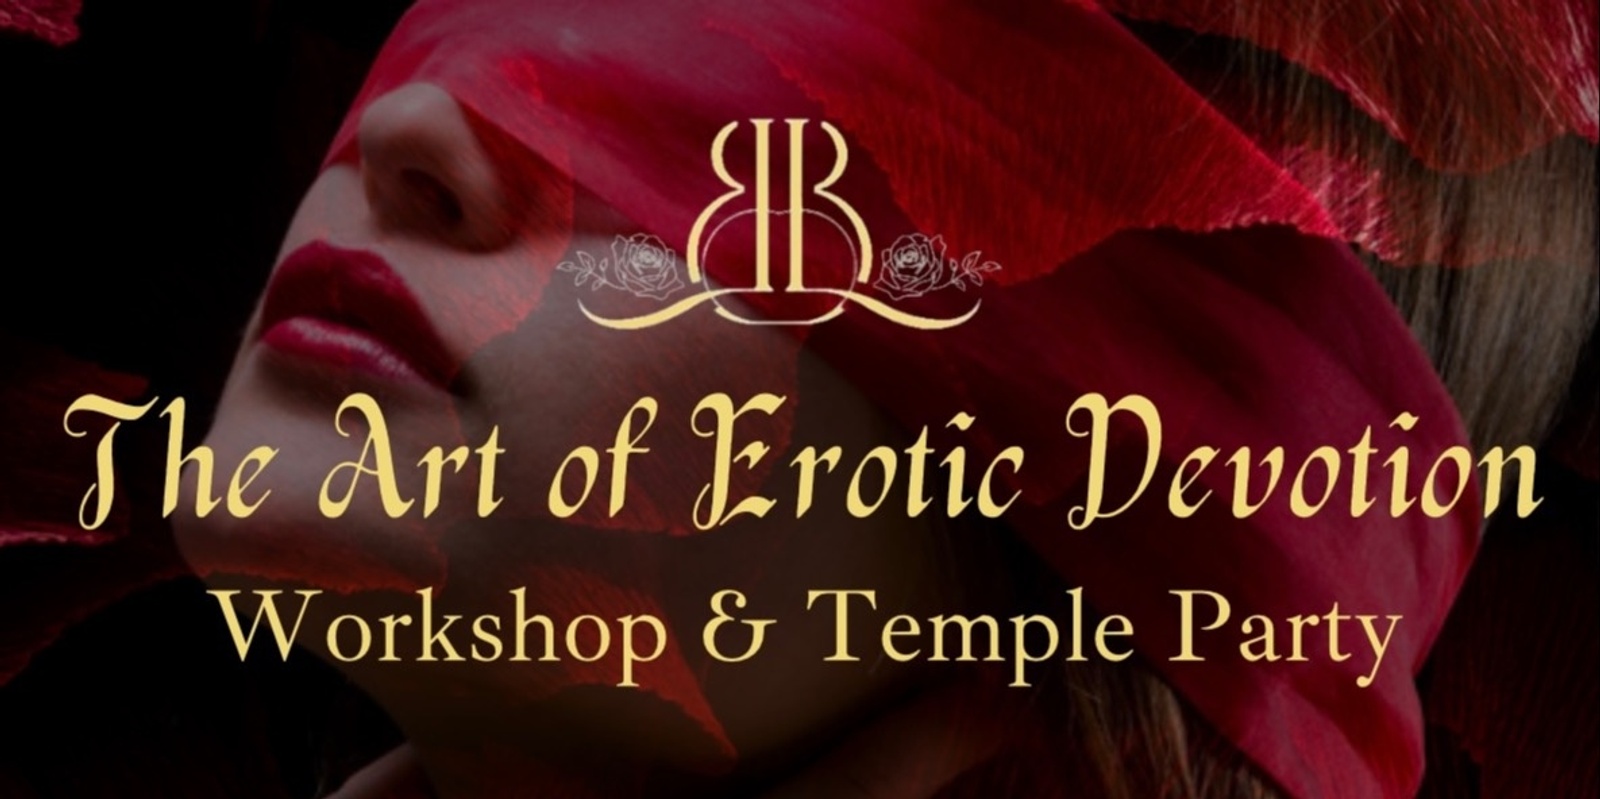 Banner image for The Art of Erotic Devotion